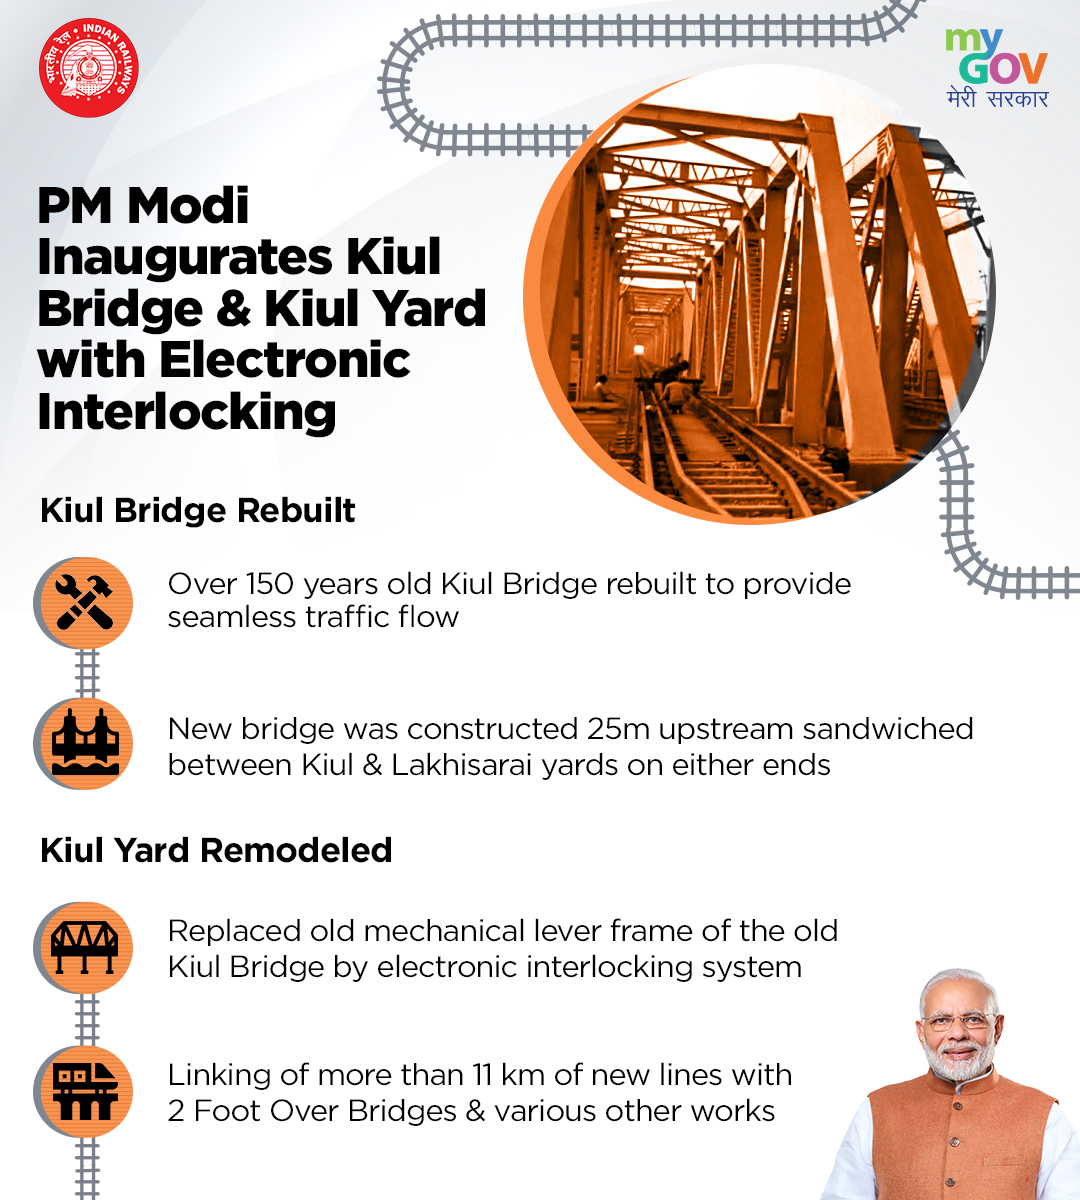 PM Modi Inaugurates Kiul Bridge & Kiul Yard with Electronic Interlocking #AatmaNirbharBihar #BiharKaPragatiPath